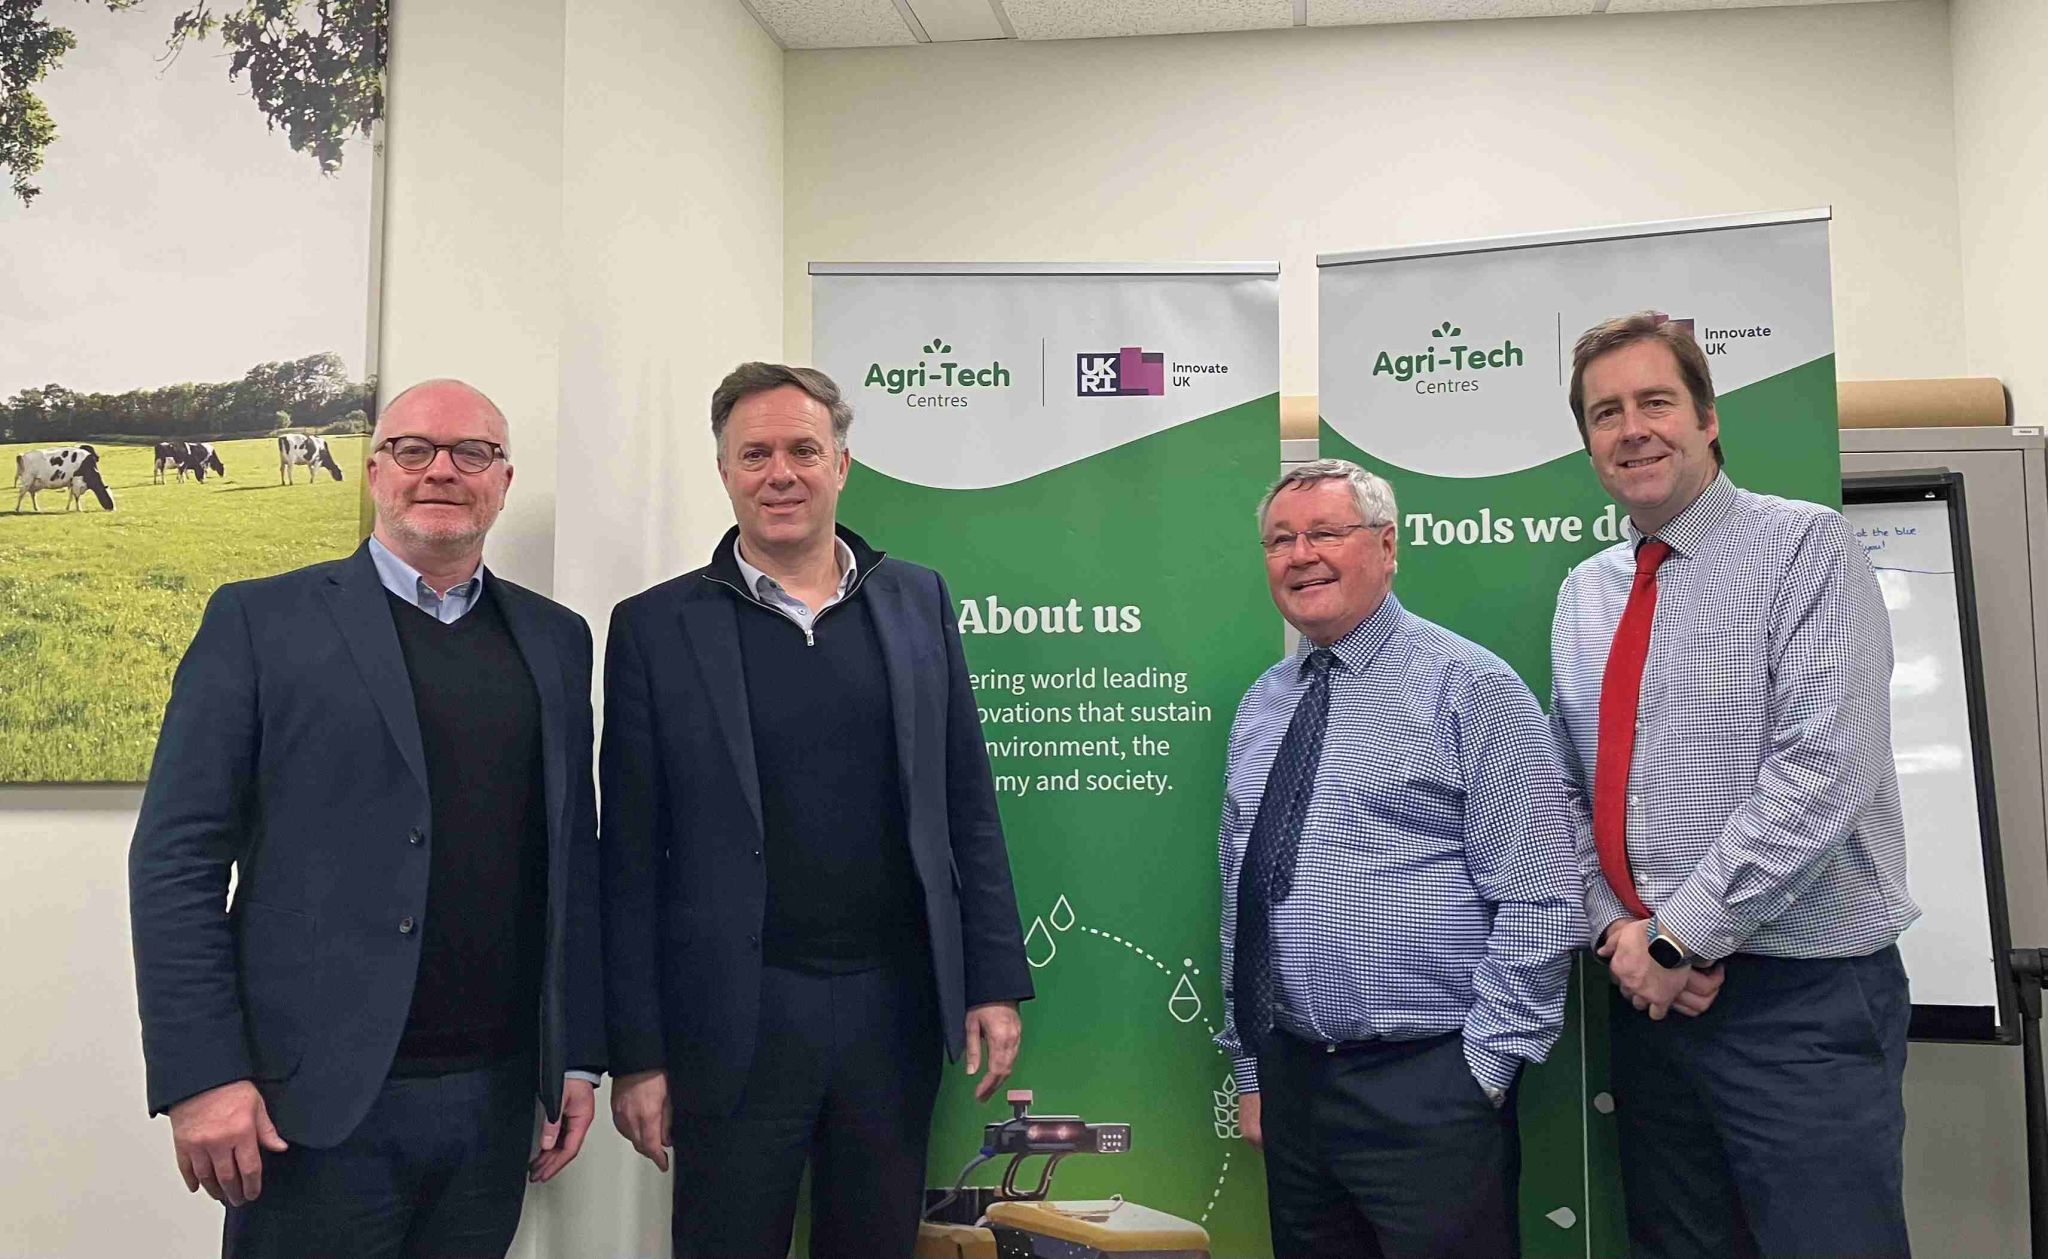 Julian Sturdy MP meets the Agri-Tech Centres team